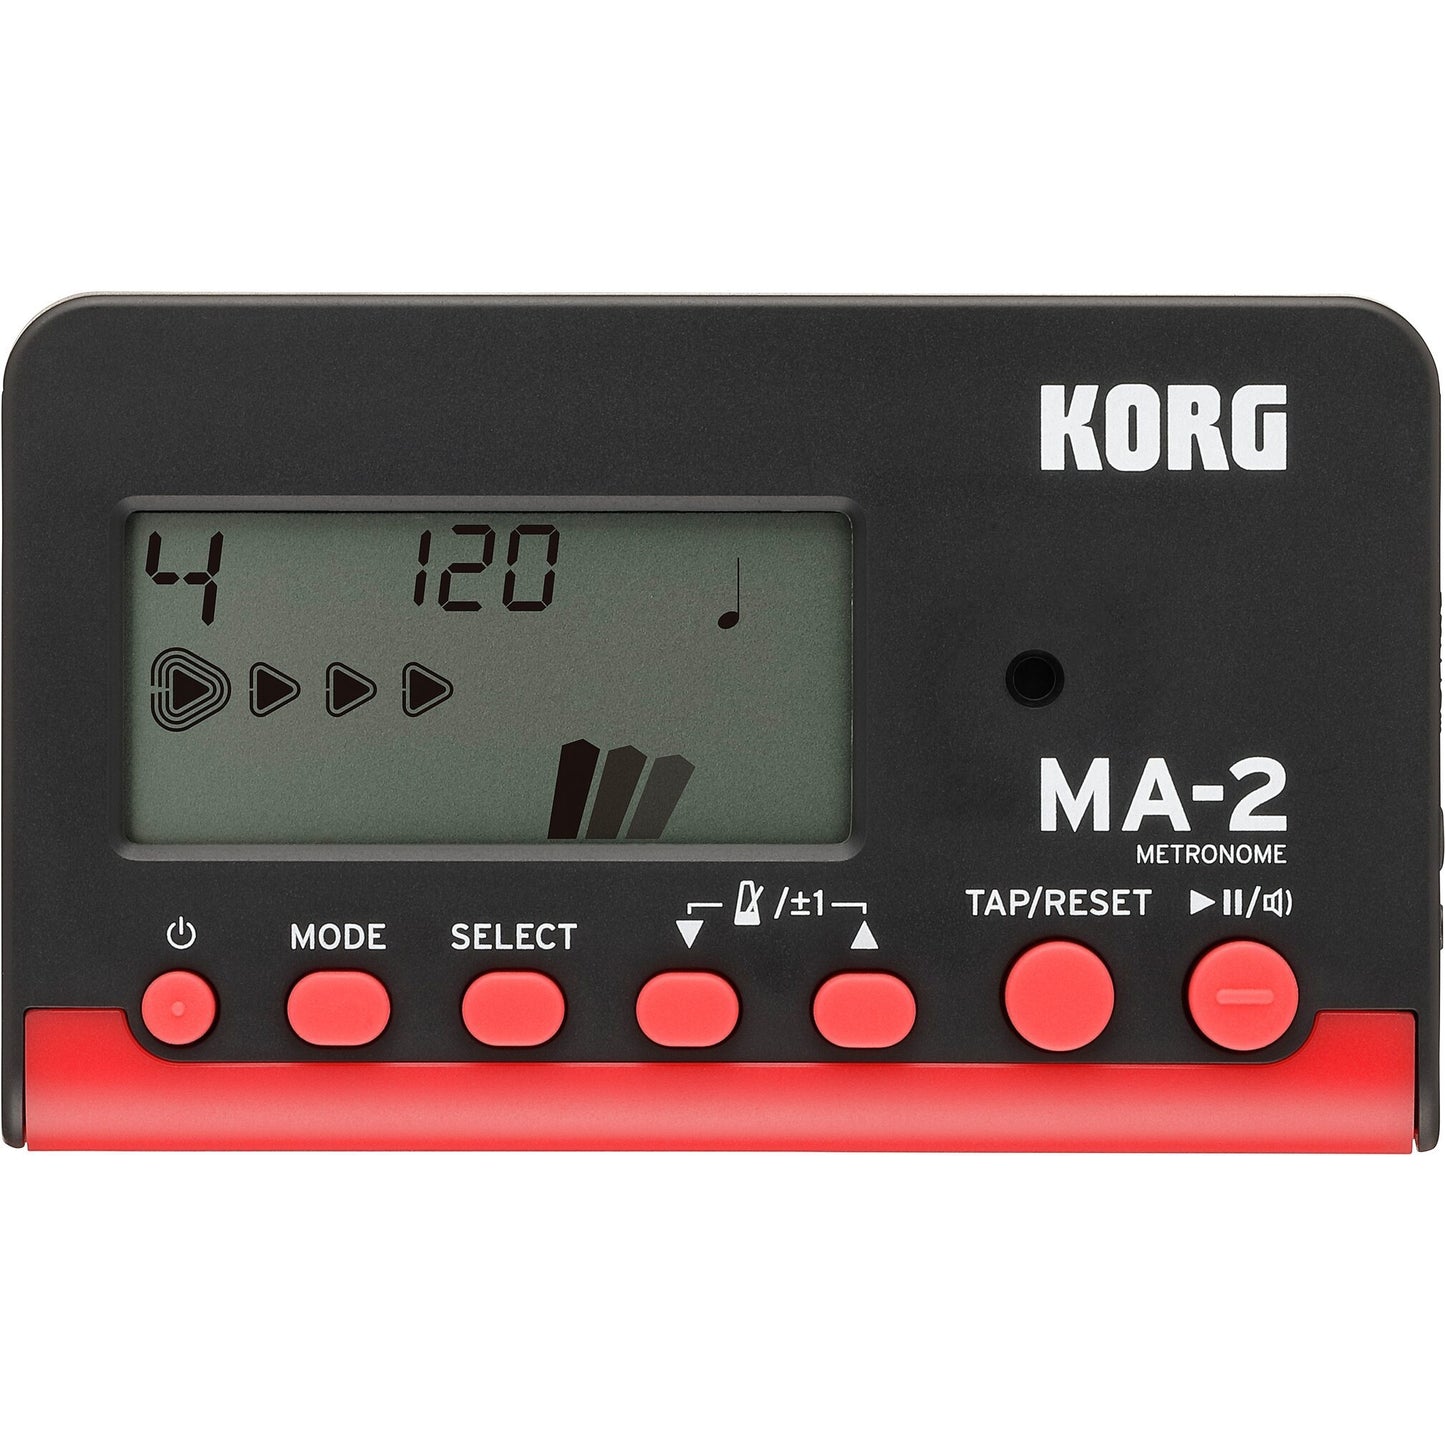 Korg MA-2 Metronome, Red and Black